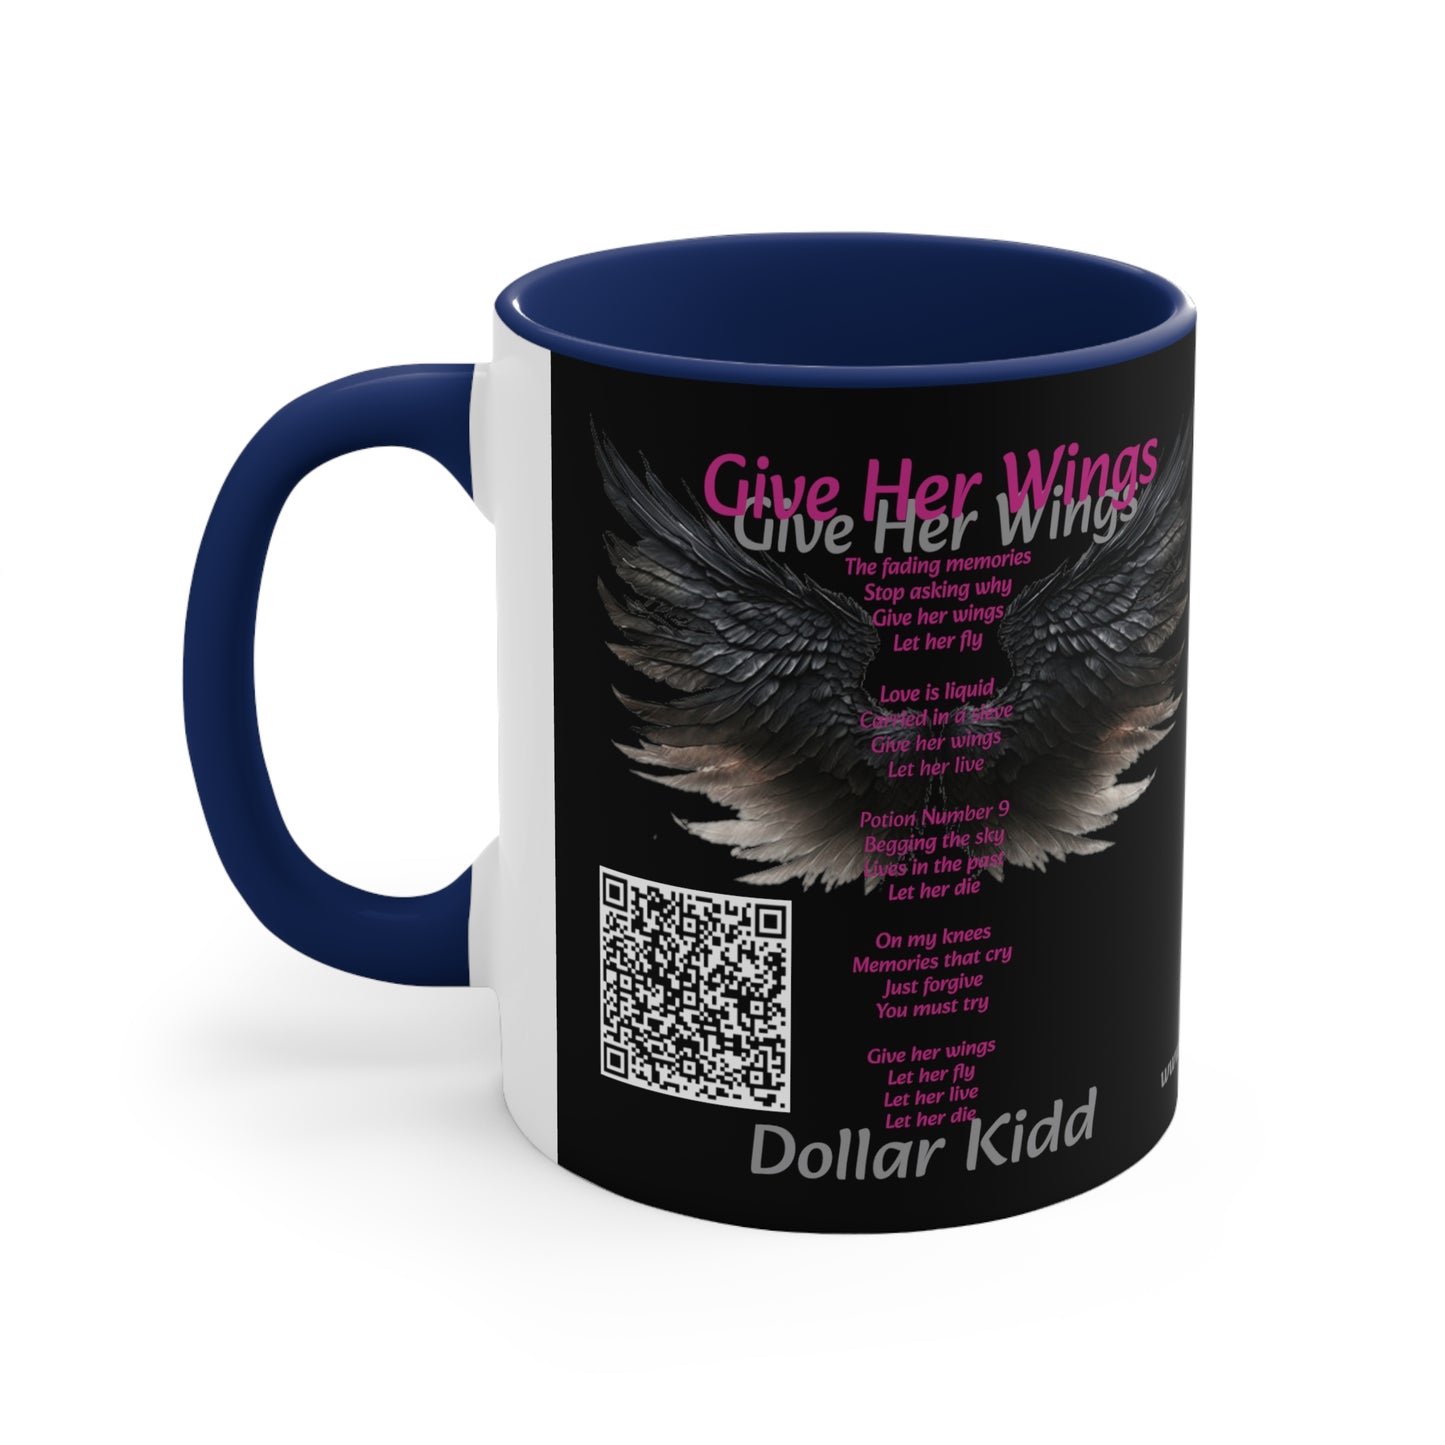 Dollar Kidd - Give Her Wings Accent Coffee Mug, 11oz